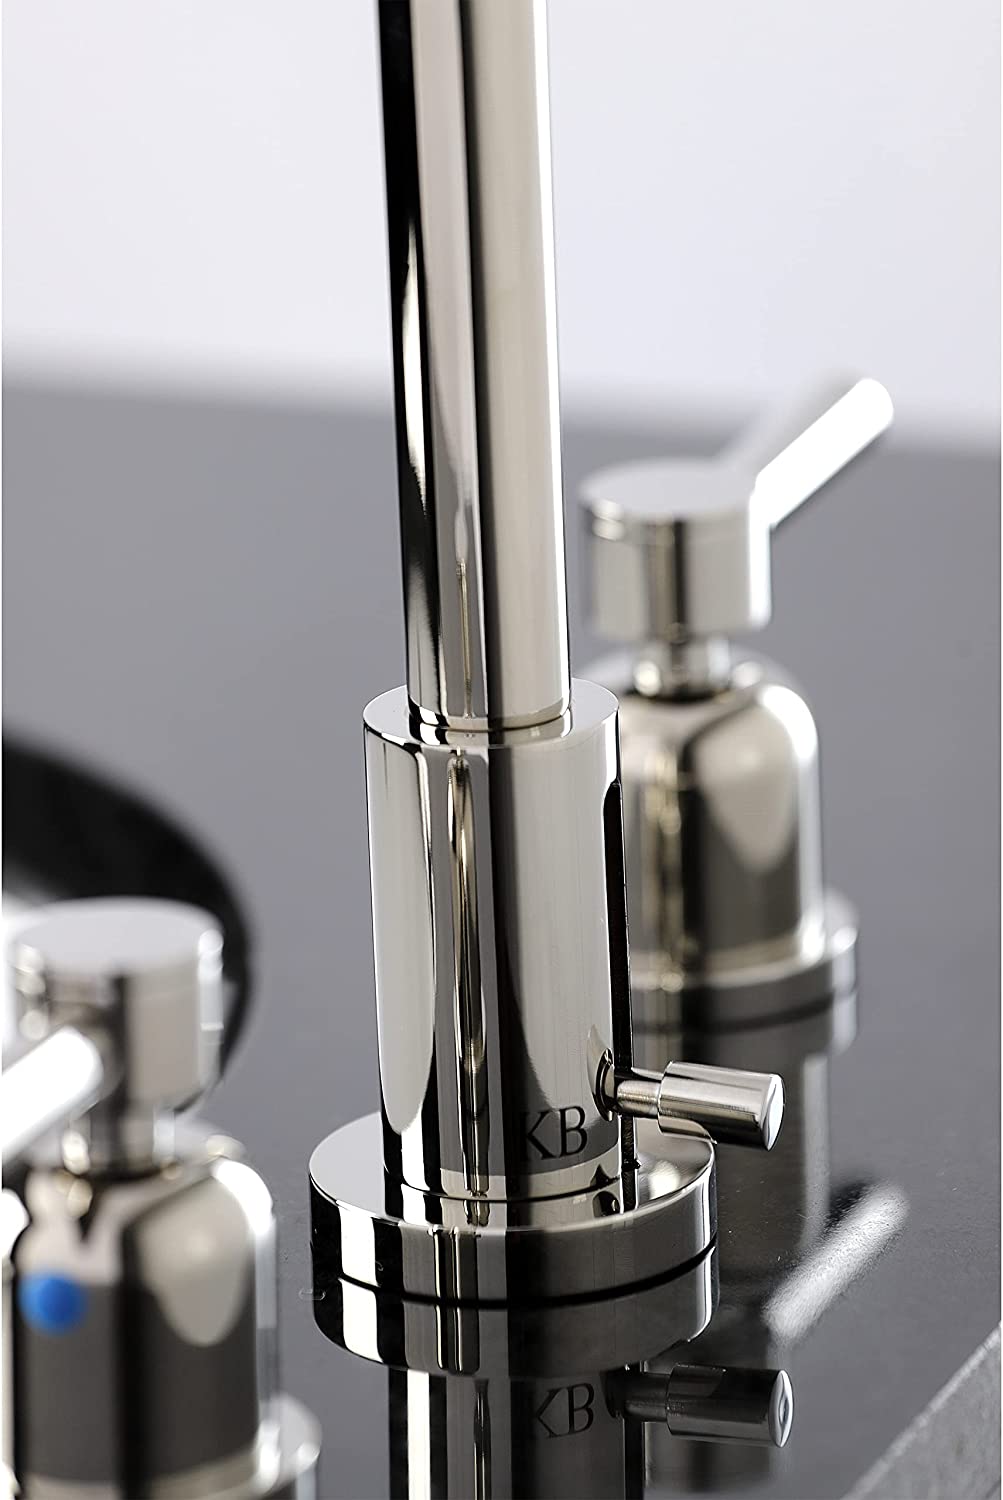 Kingston Brass FSC8929DL Concord Widespread Bathroom Faucet, 5-3/8 Inch in Spout Reach, Polished Nickel